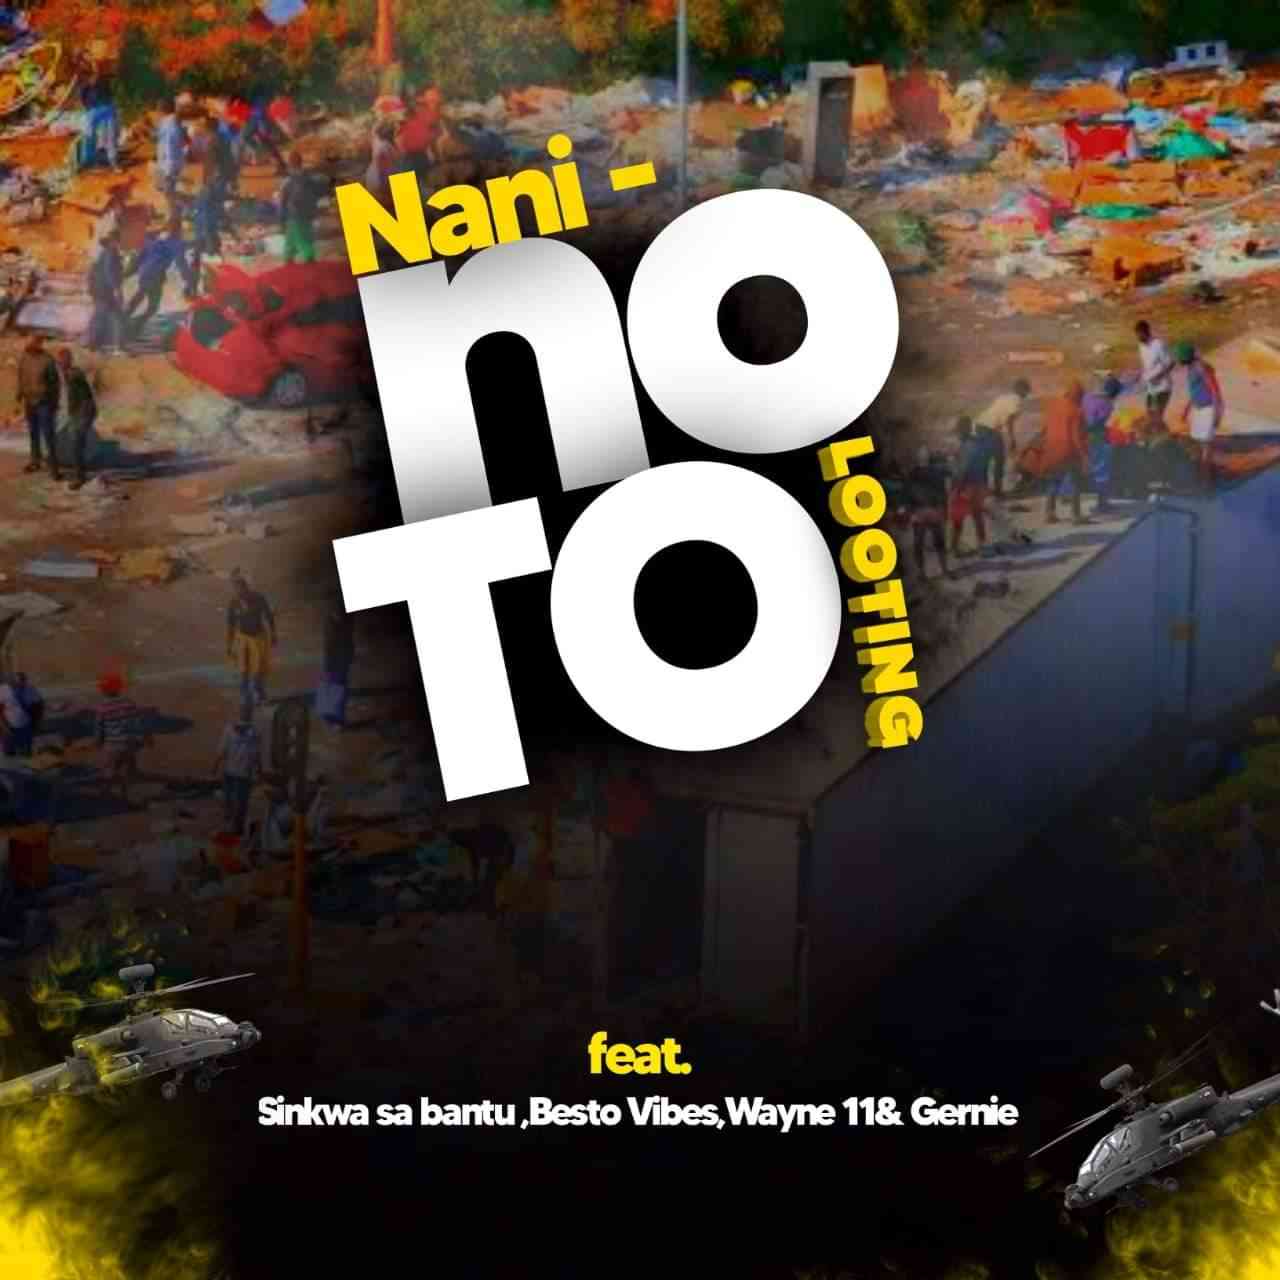 The Squad (Nani) No To Looting ft. Sinkwa Sa Bantu, Besto Vibez, Wayne11 & Gernie